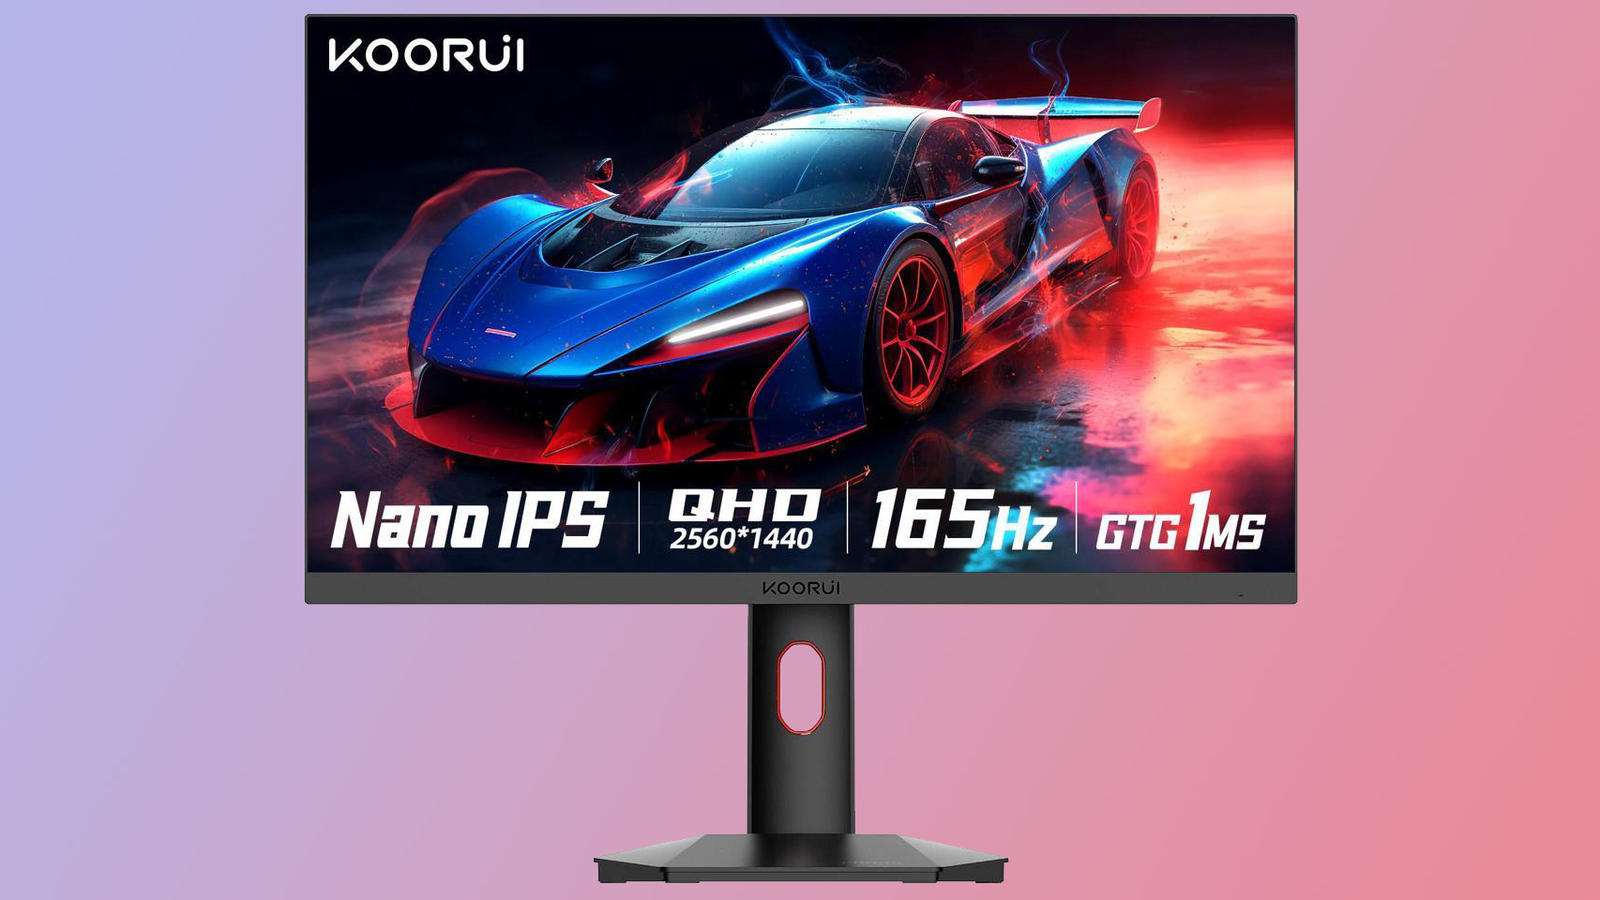 KOORUI's 1440p Gaming Monitor sees appealing price drop in post-Christmas  deal - PC Guide